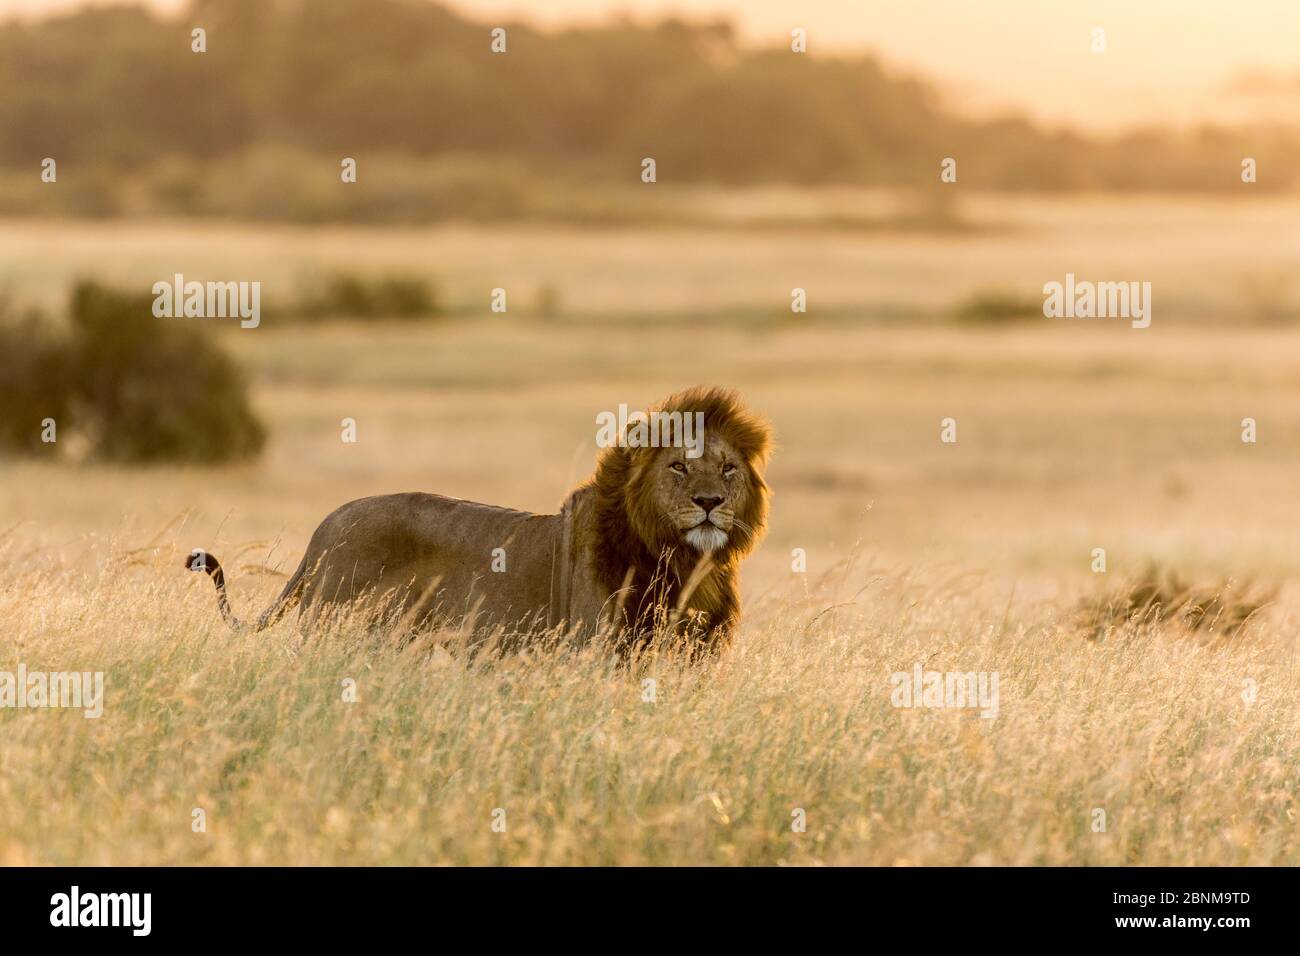 Afrikanischer Löwe (Panthera leo) steht im trockenen Gras bei Sonnenuntergang, Masai Mara Game Reserve, Kenia. Stockfoto